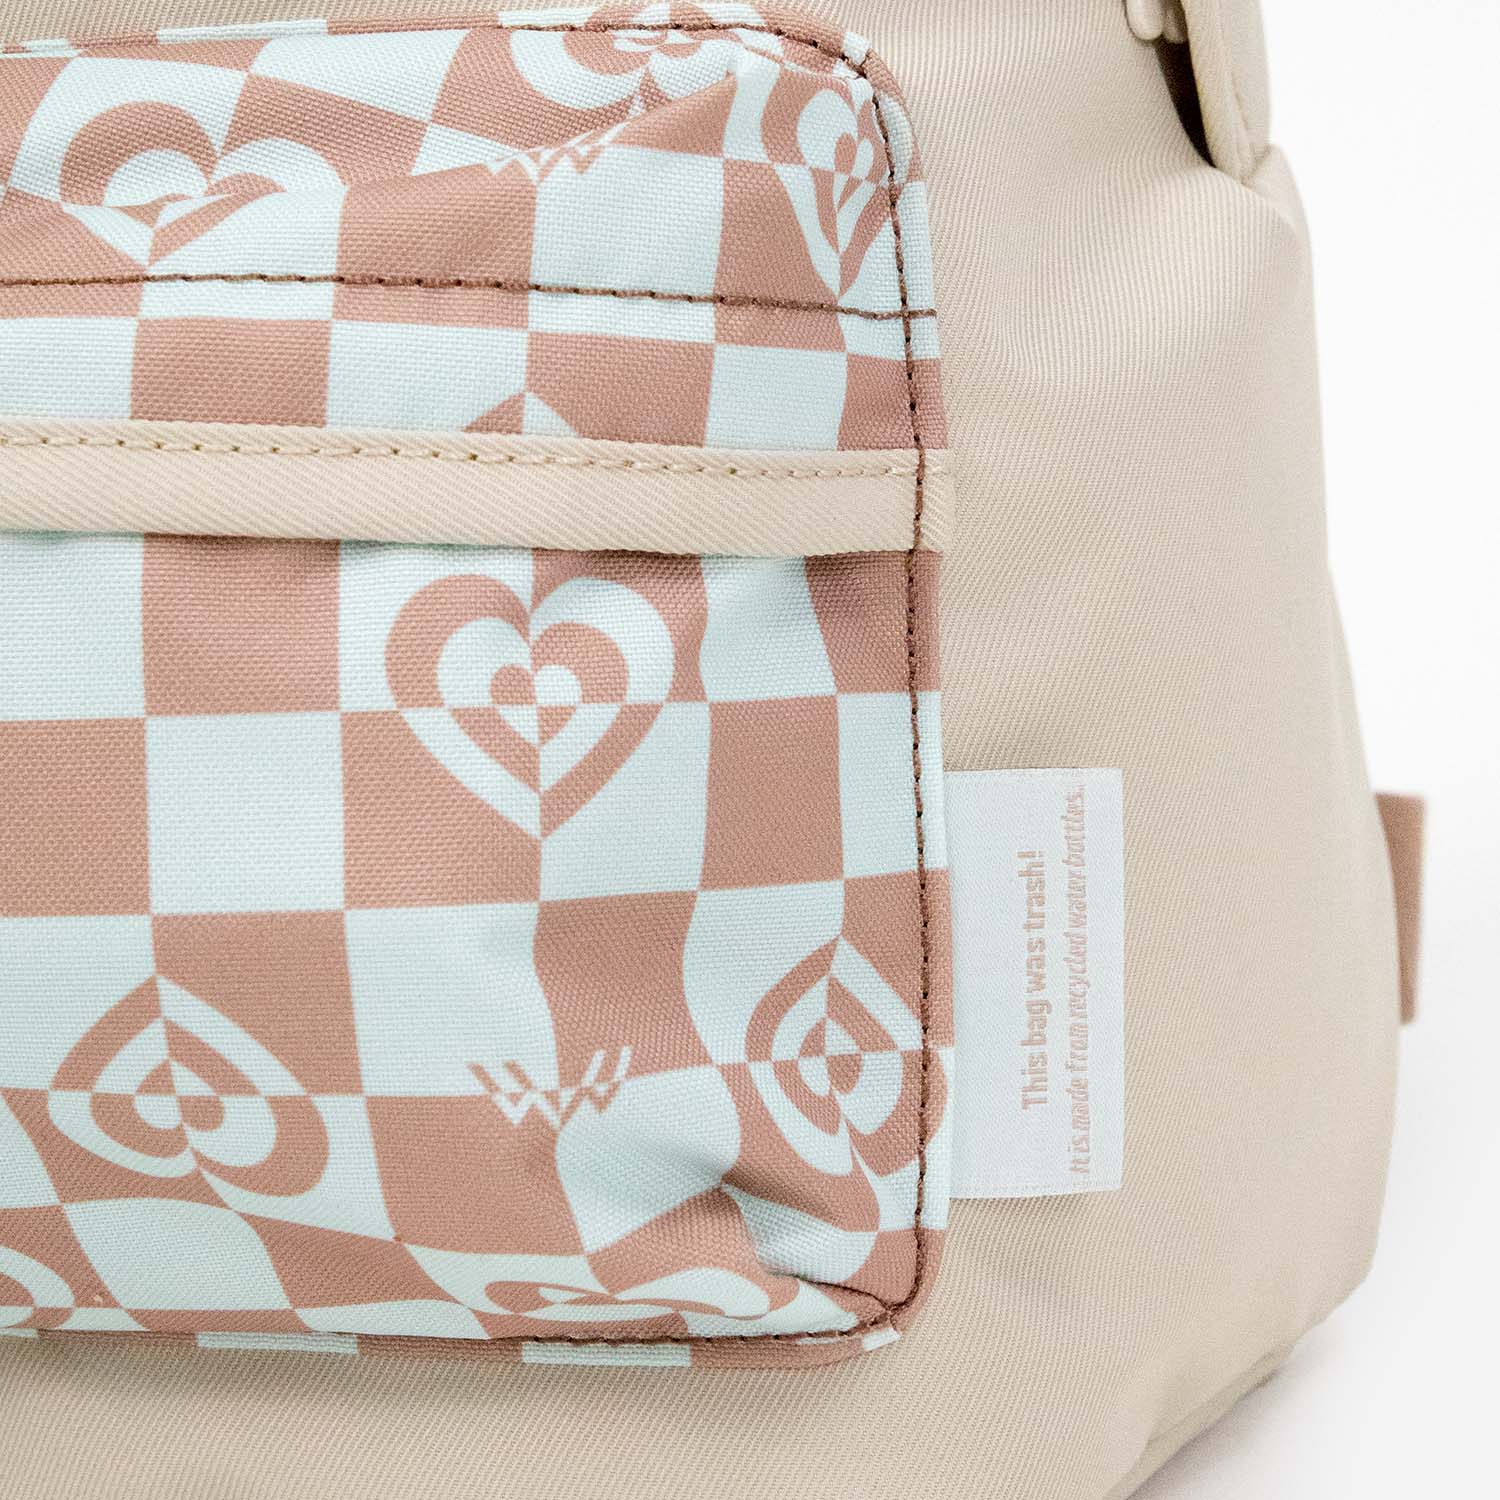 Doughnut Official Kaleido Series Plus One Mini Backpack in Mushroom Checked